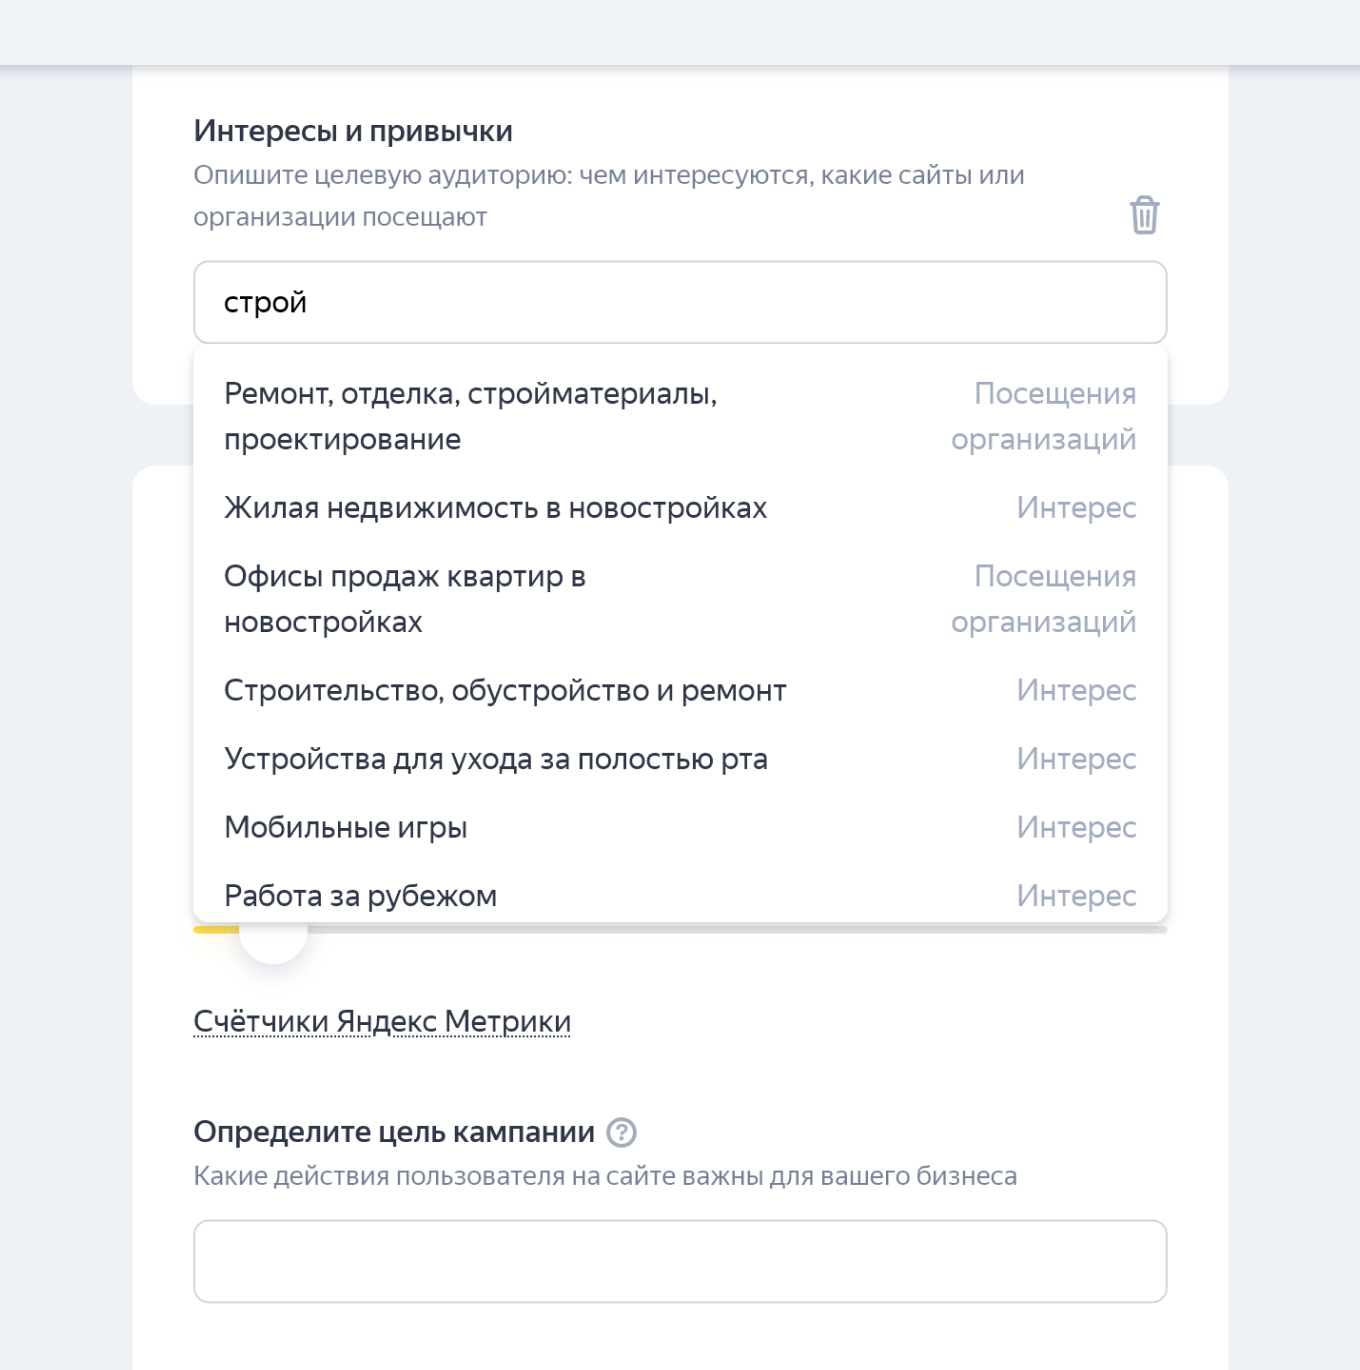 Настройка интересов аудитории в Яндекс Директе